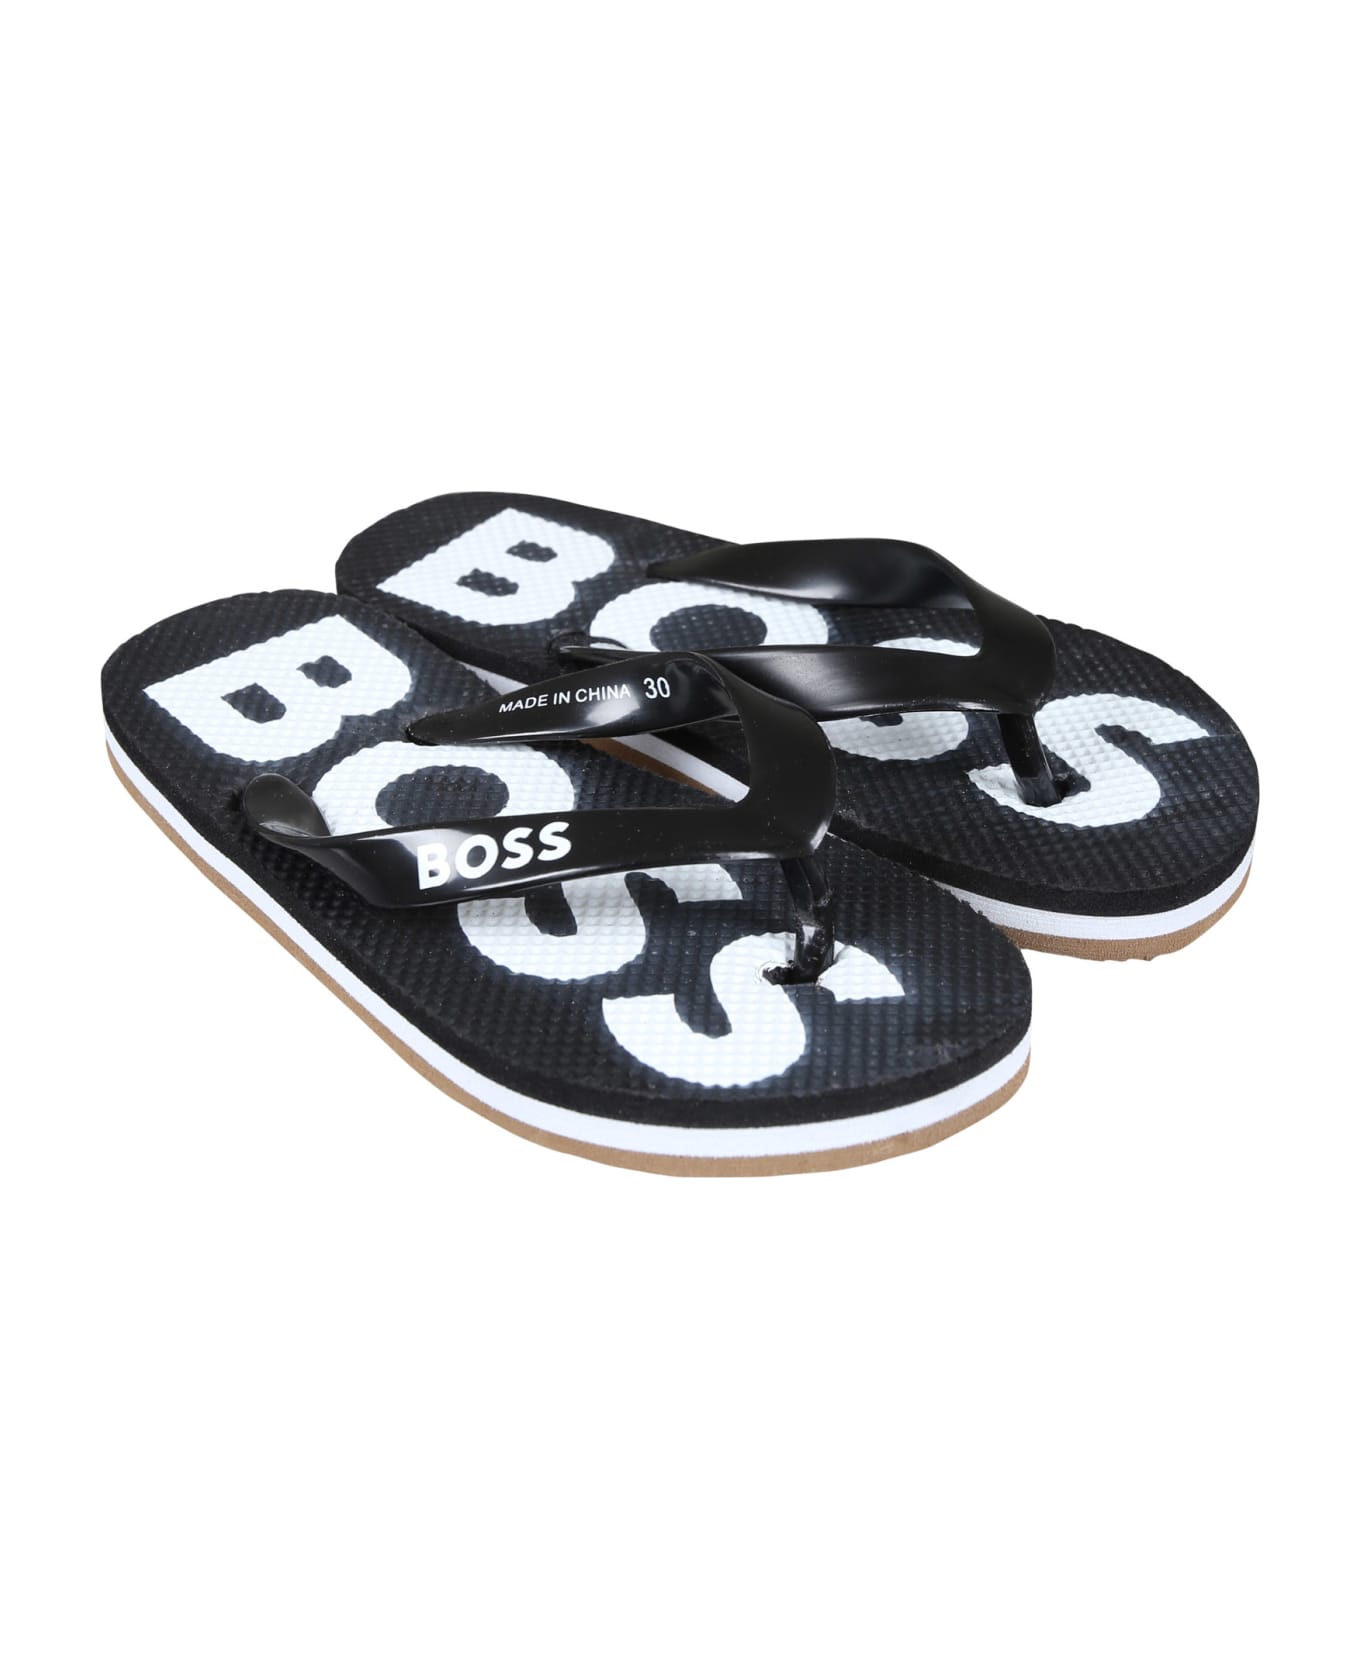 Hugo Boss Black Flip Flops For Boy With Logo - Black